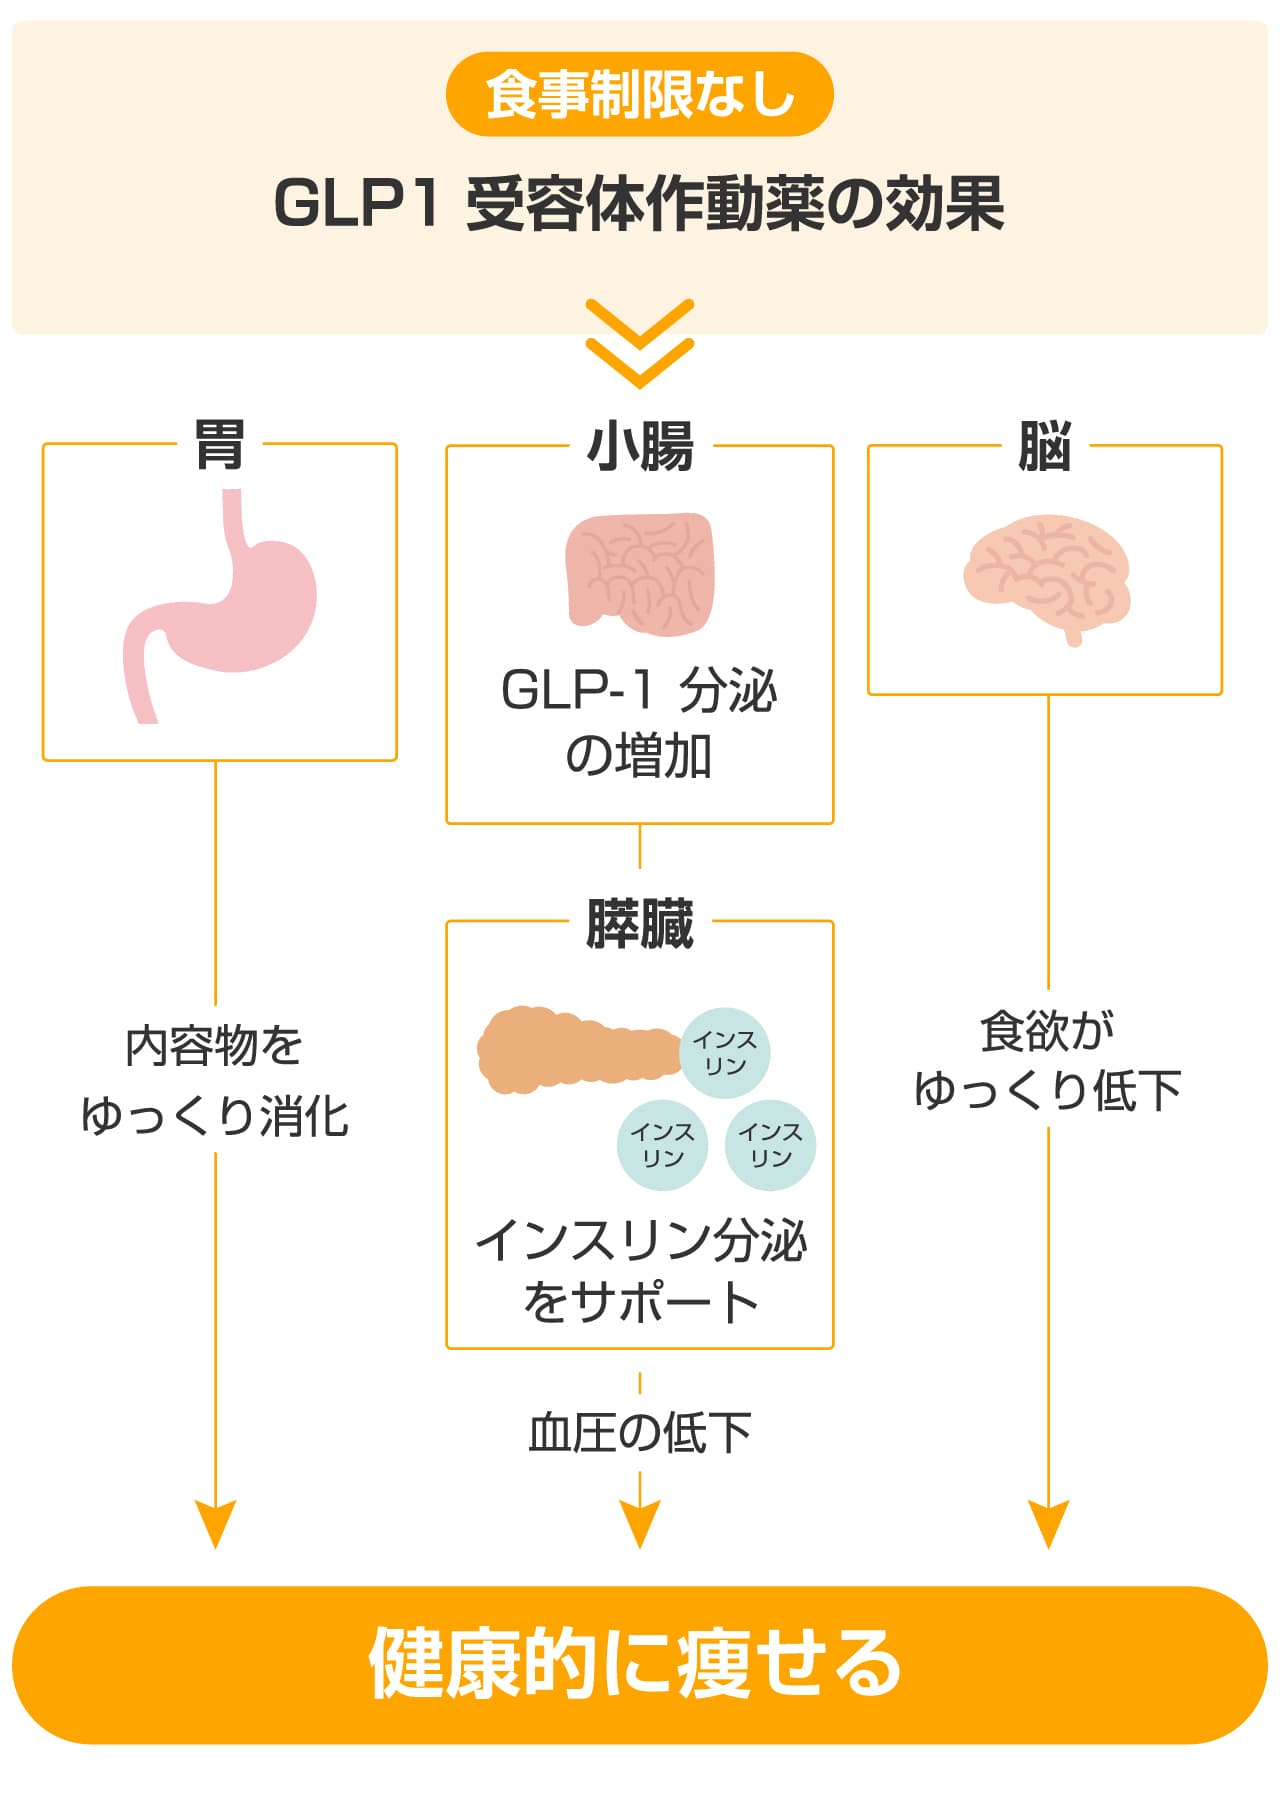 GLP1受容体作動薬の効果